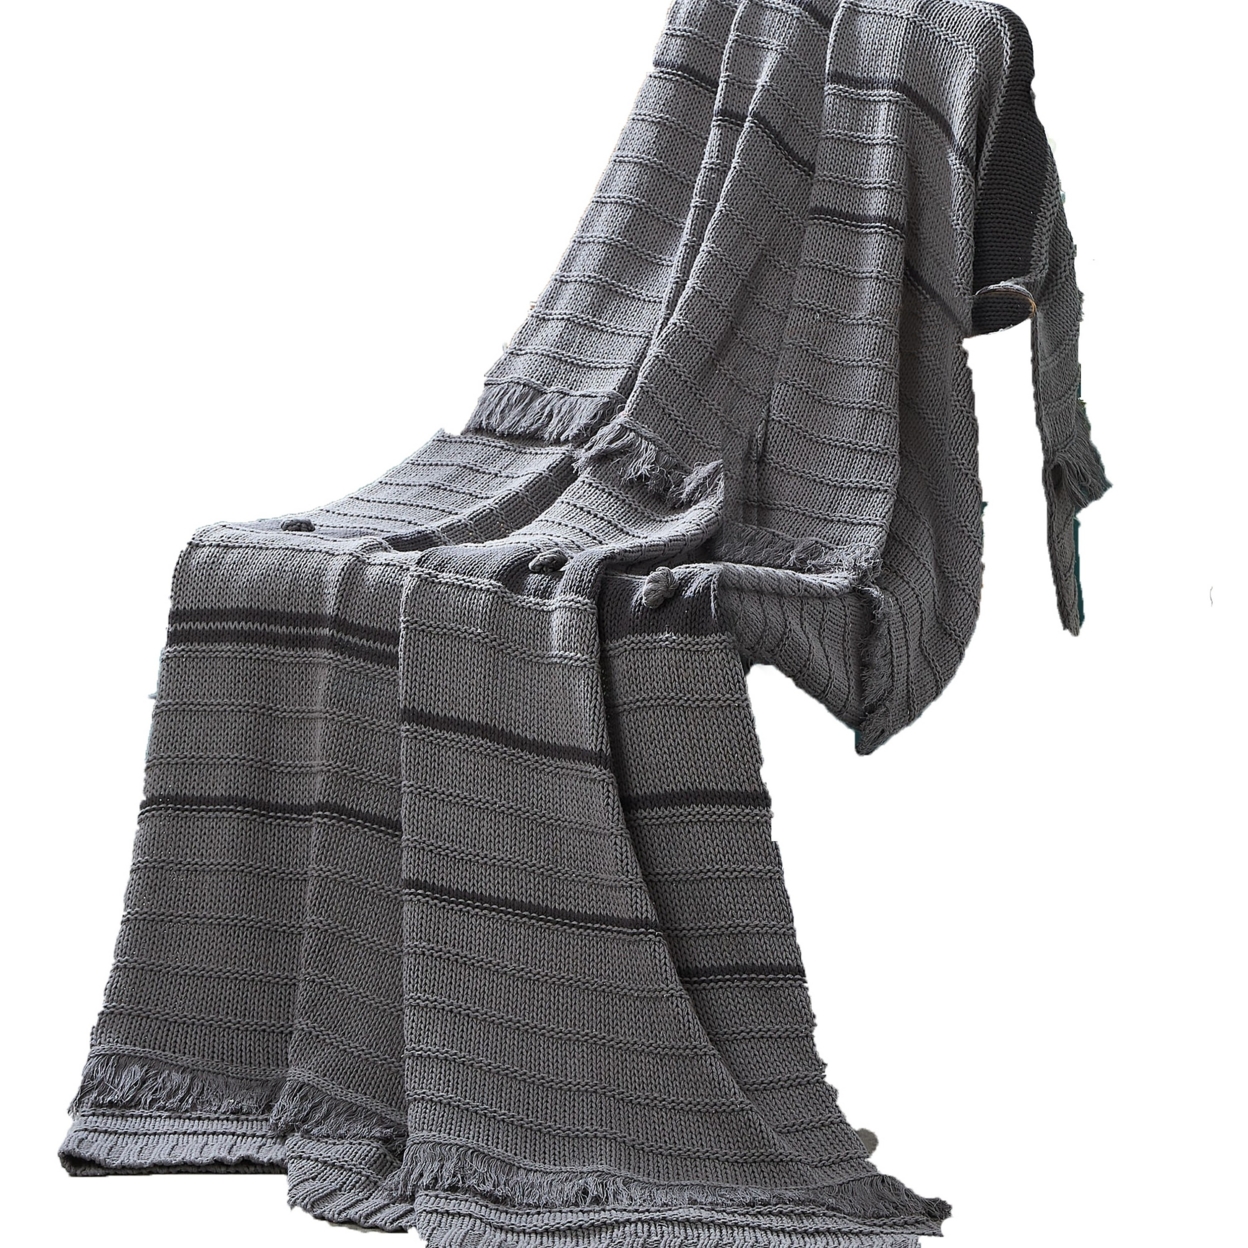 Kai 50 X 70 Throw Blanket With Fringes, Soft Knitted Cotton, Gray- Saltoro Sherpi